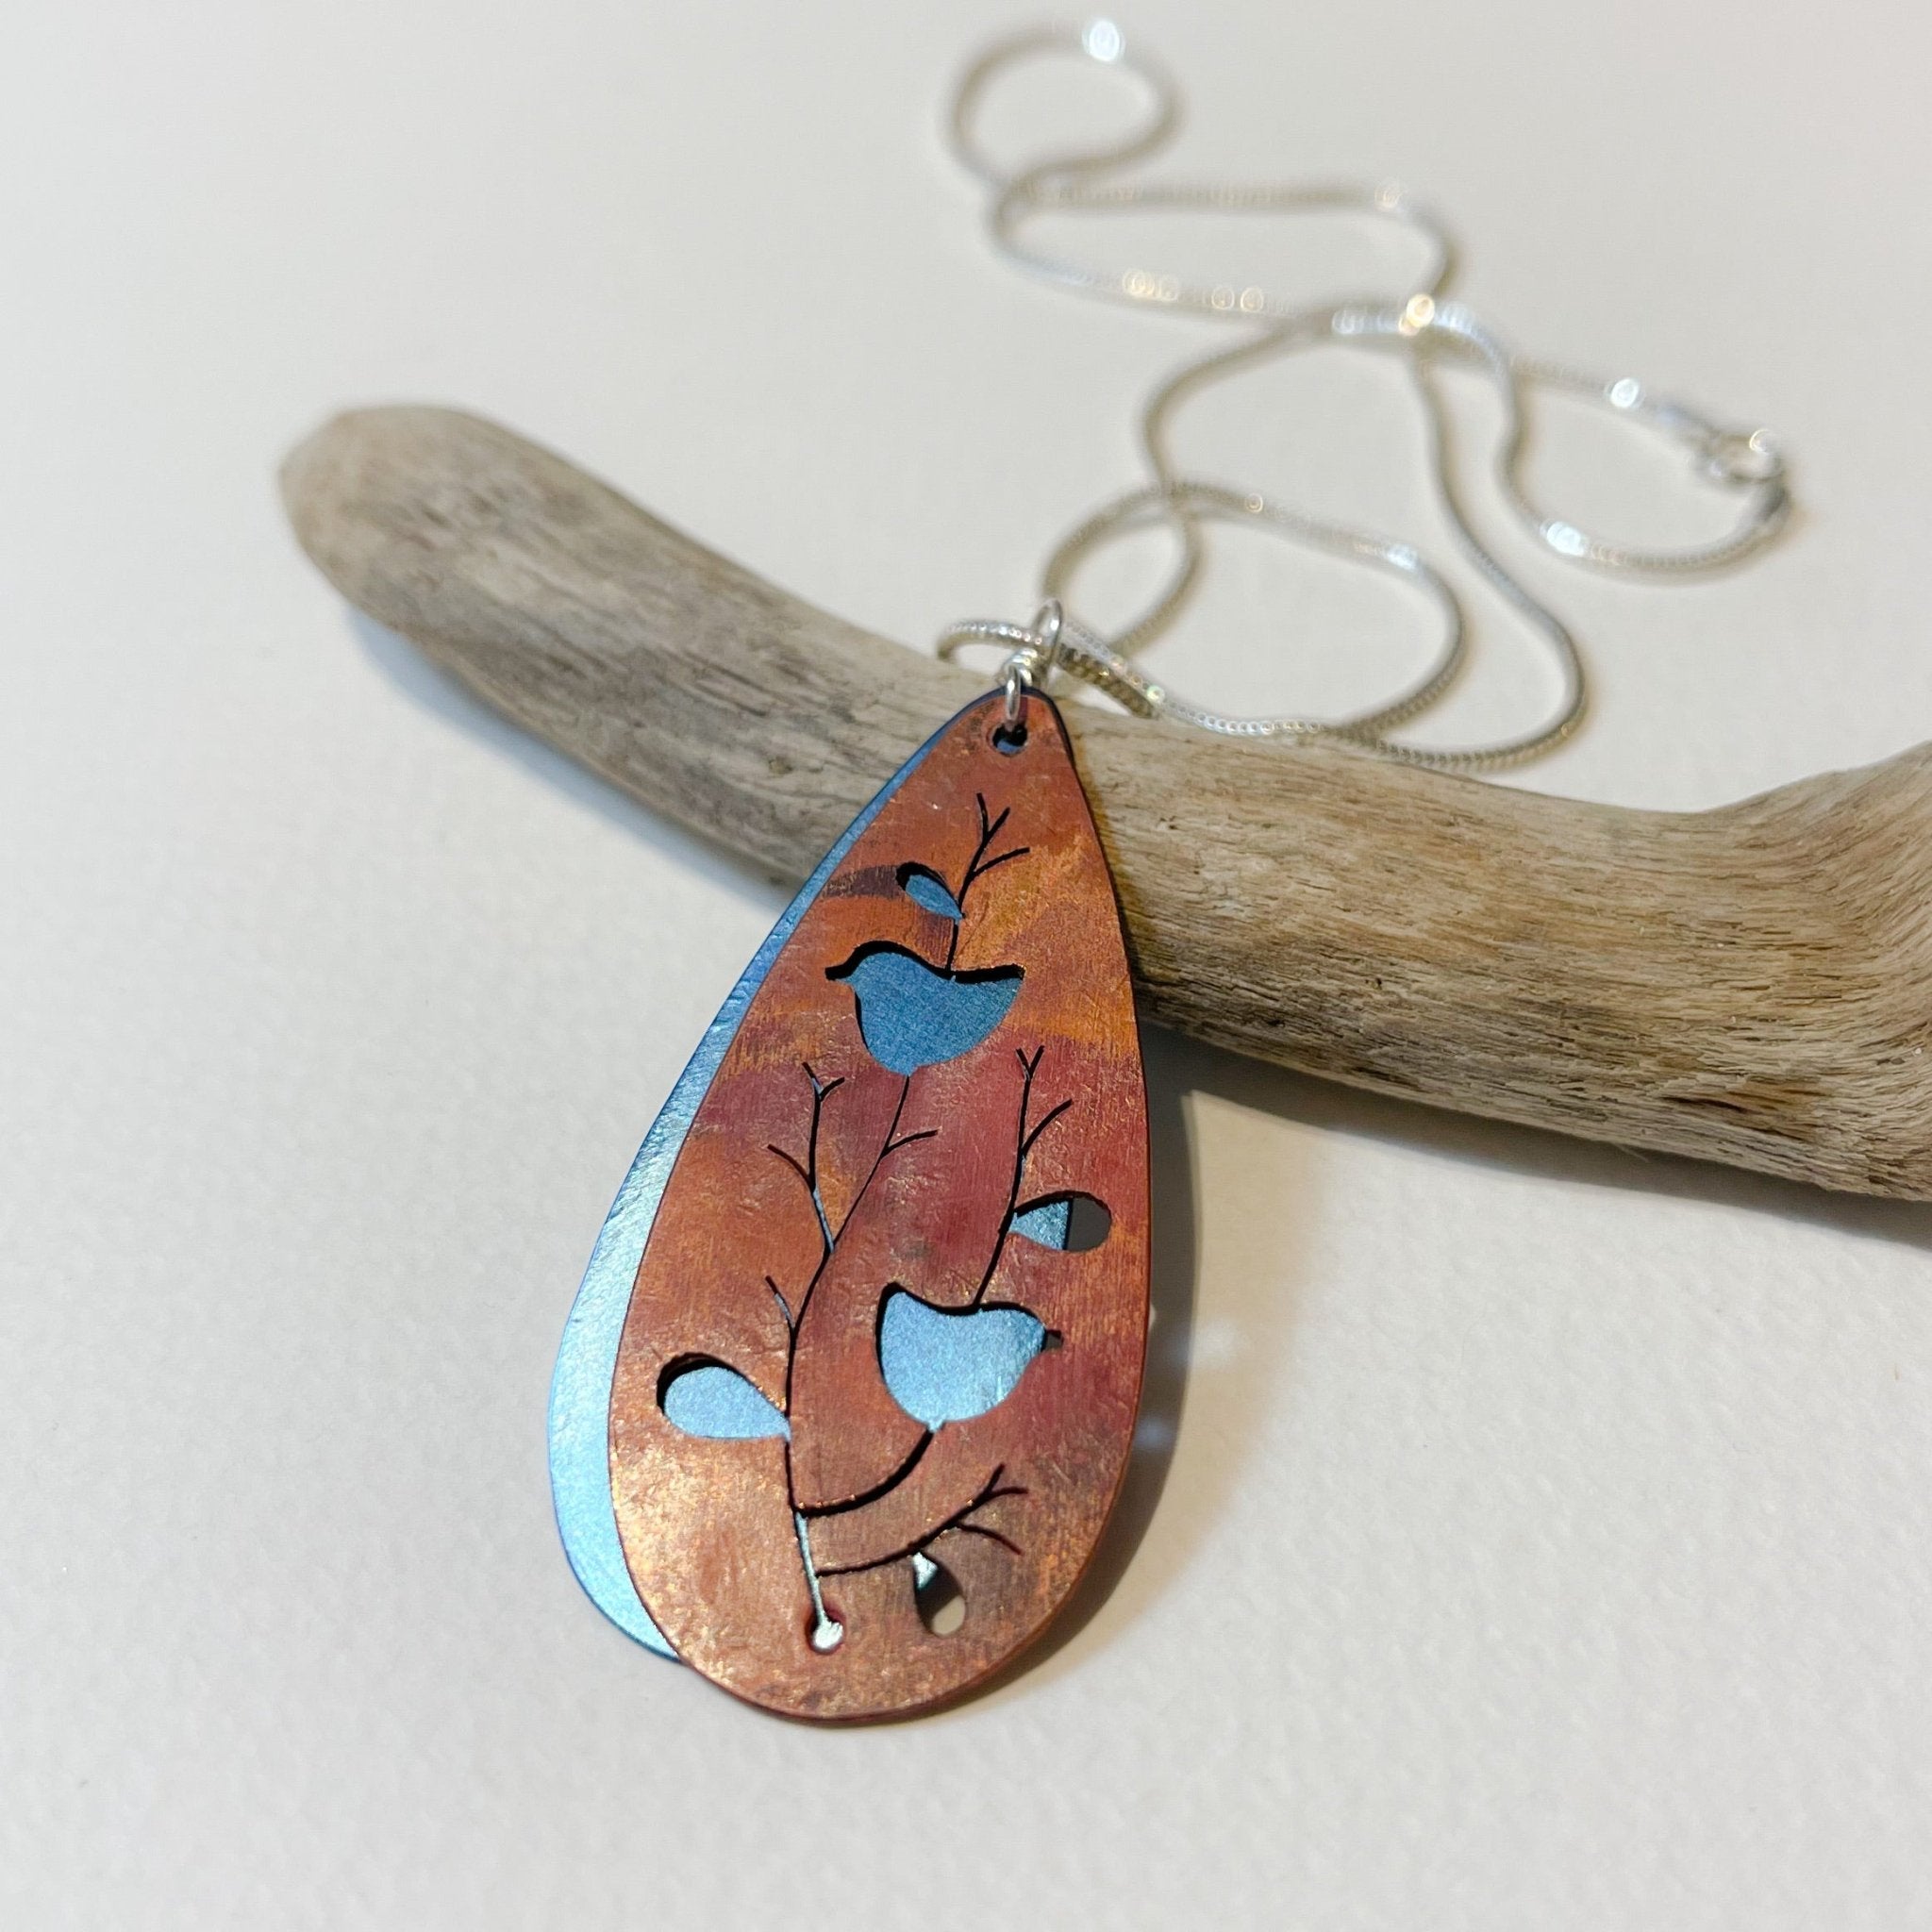 Long Teardrop Bird Cutout Necklace - The Nancy Smillie Shop - Art, Jewellery & Designer Gifts Glasgow